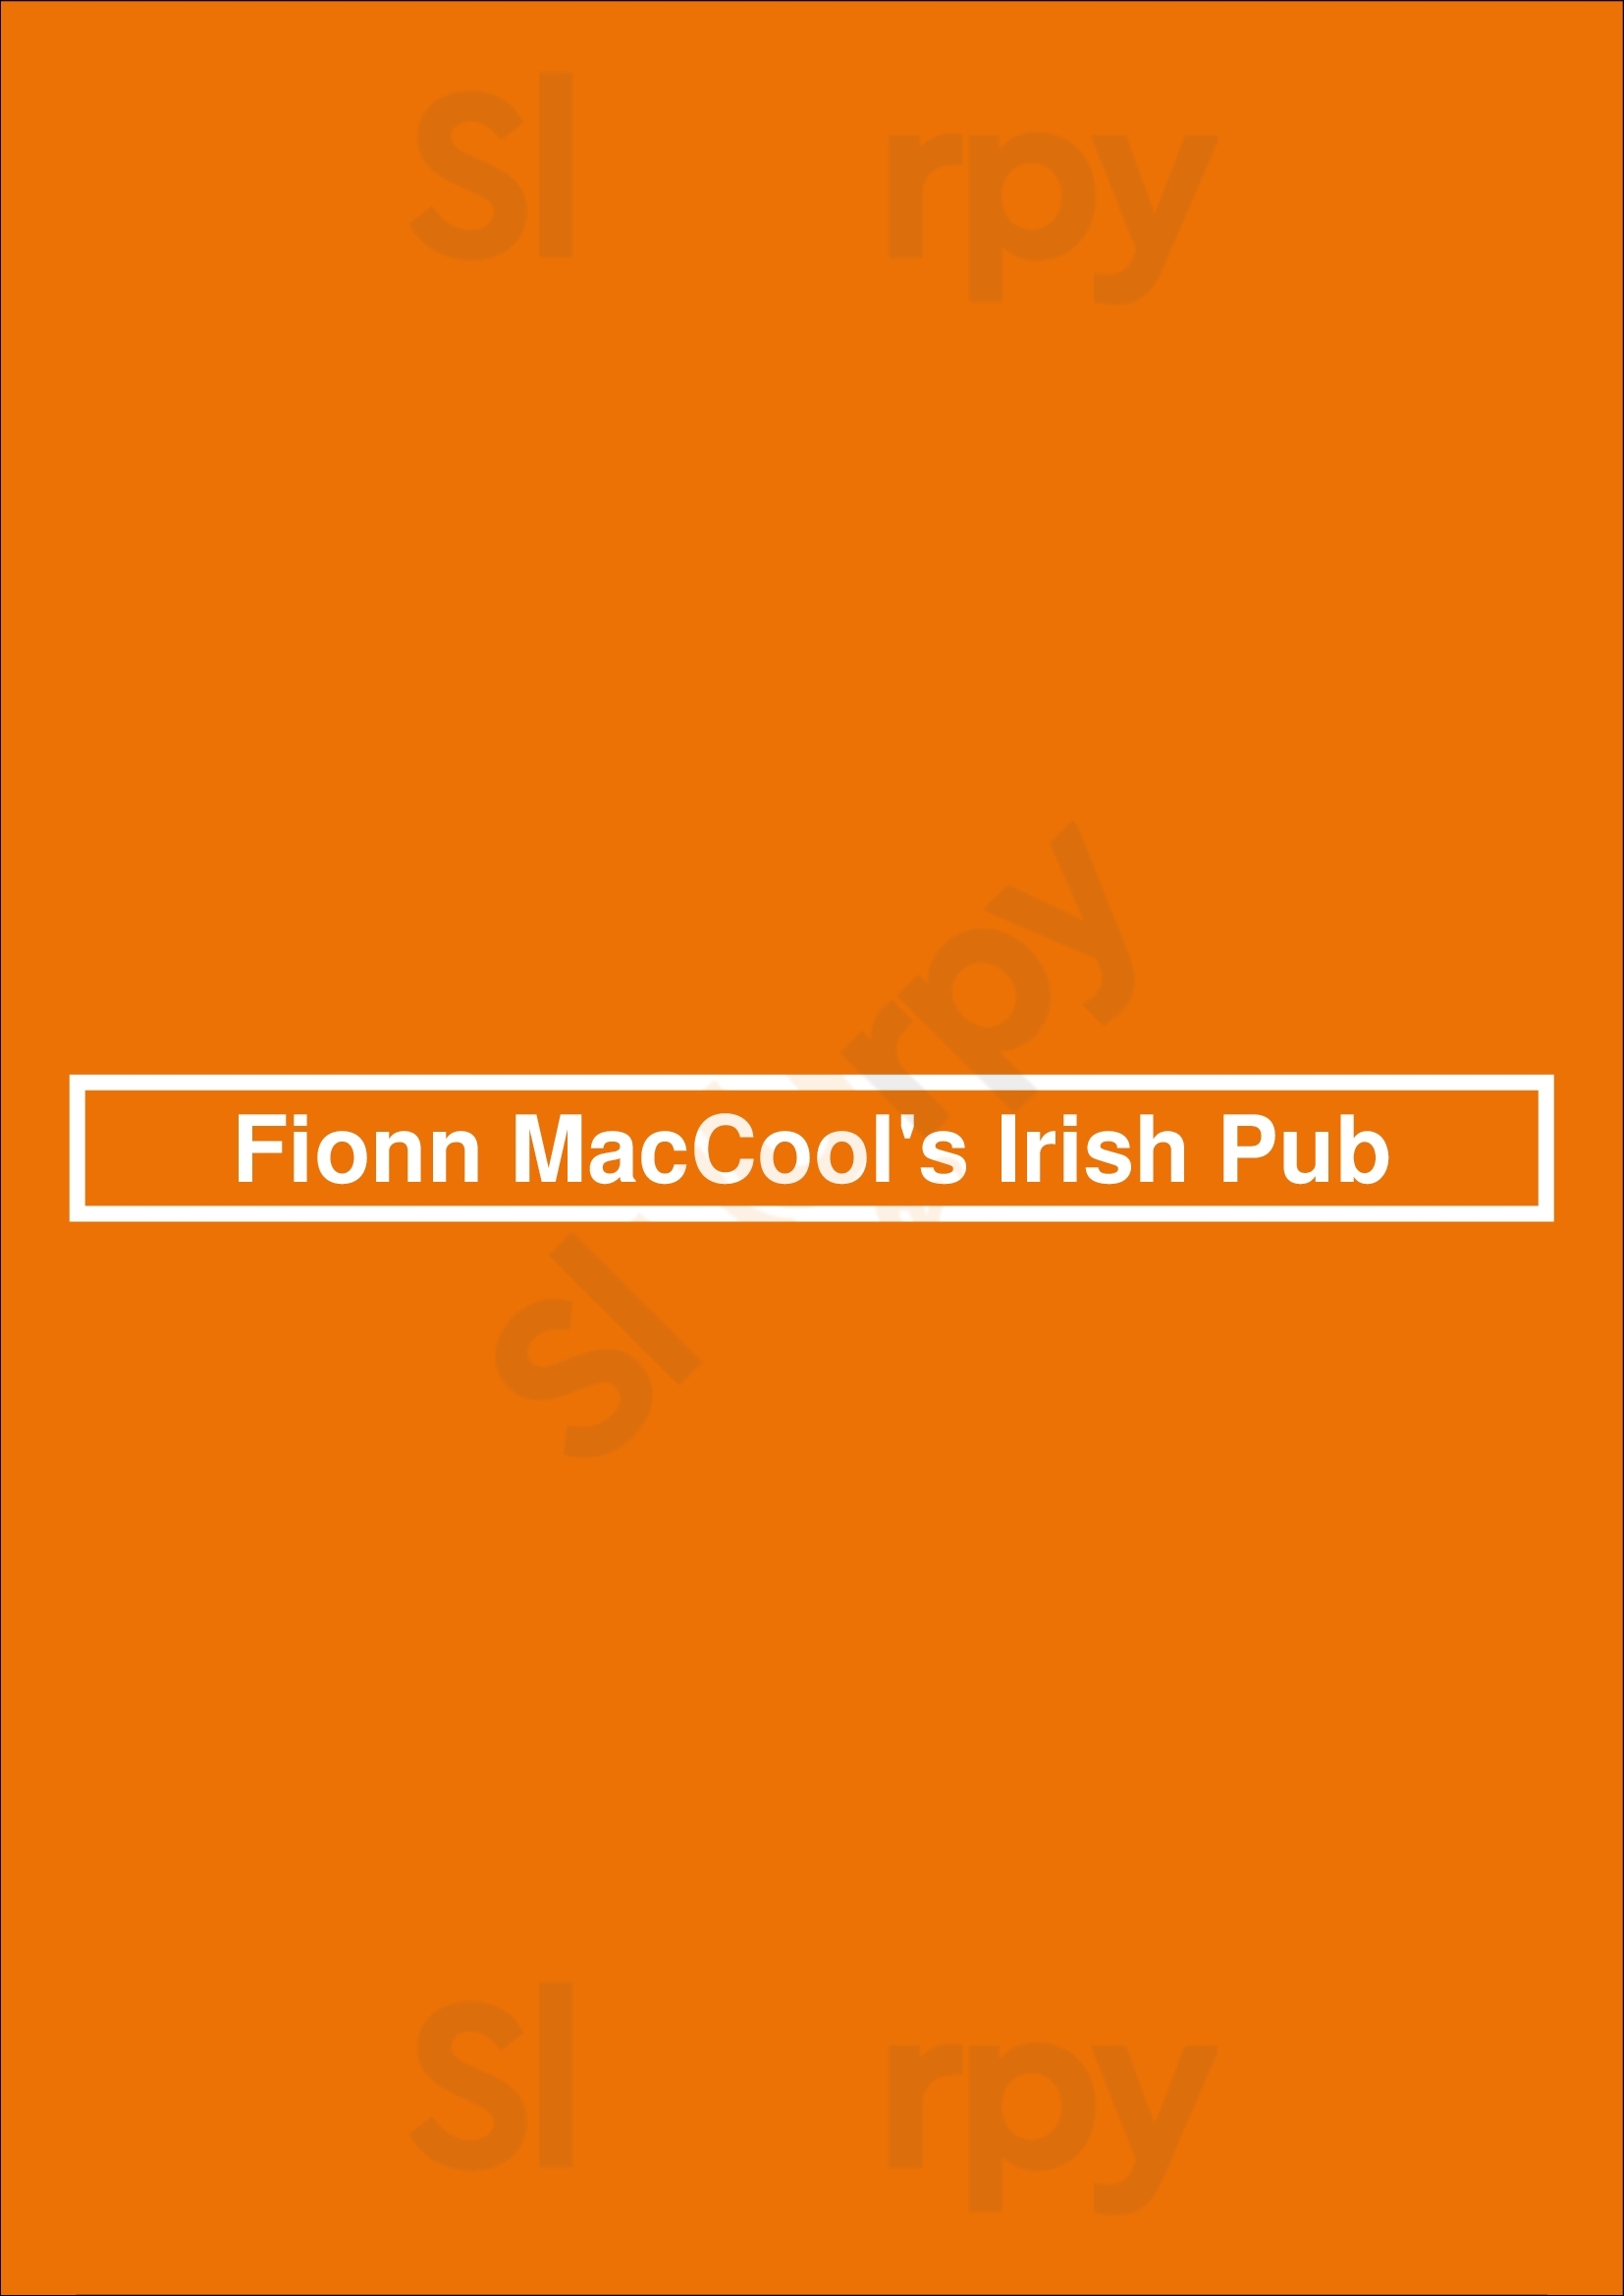 Fionn Maccool's Vaughan Menu - 1